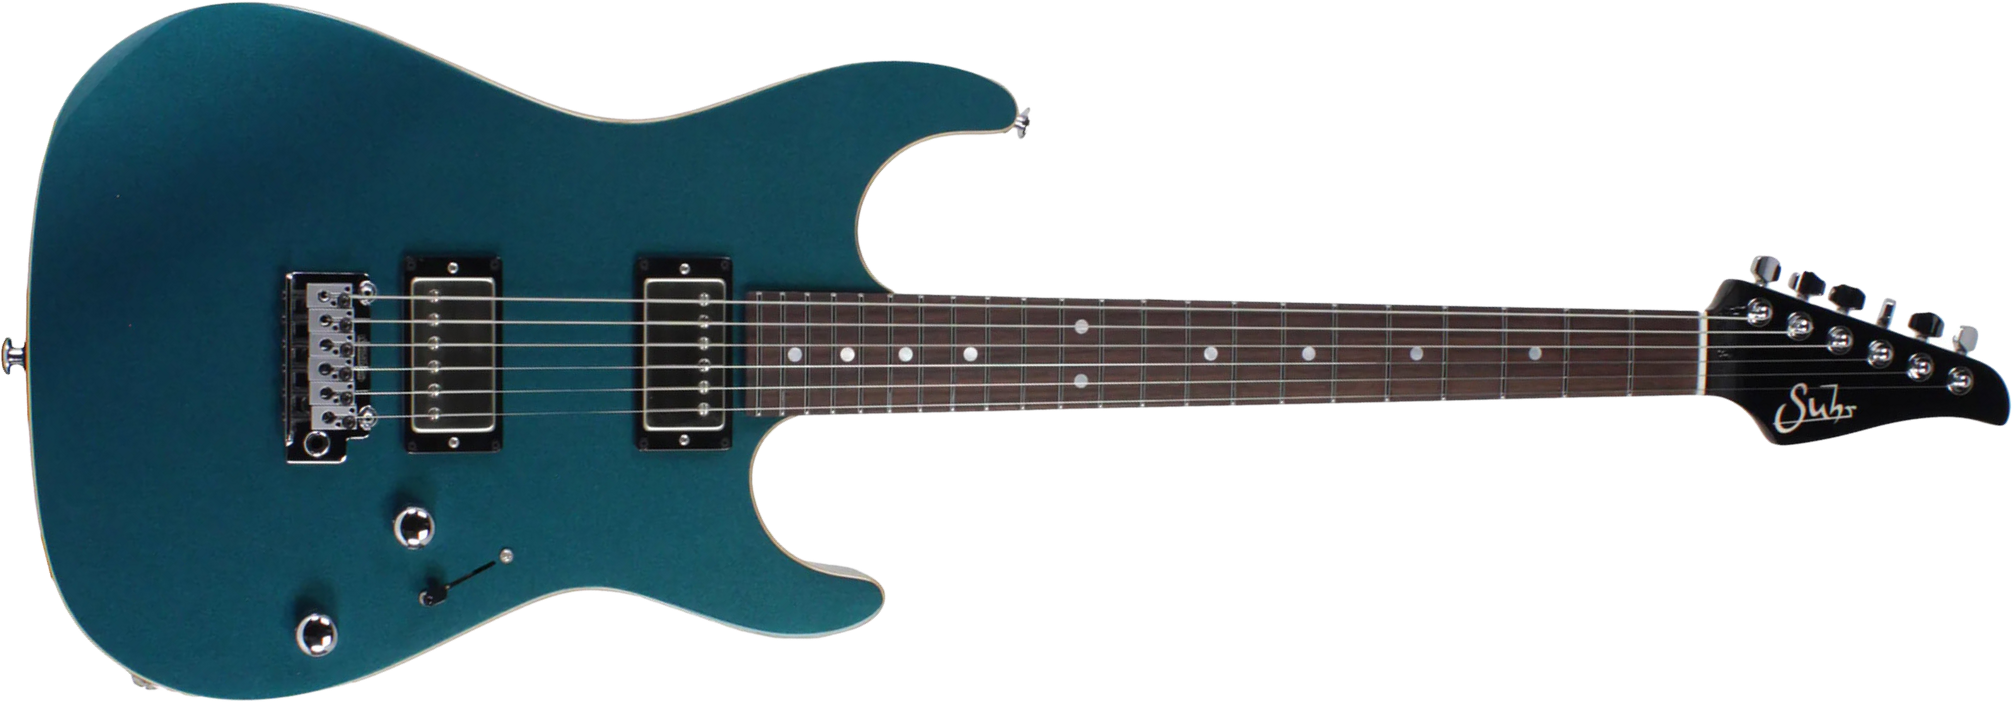 Suhr Pete Thorn Standard 01-sig-0012 Signature 2h Trem Rw - Ocean Turquoise Metallic - Guitarra eléctrica con forma de str. - Main picture